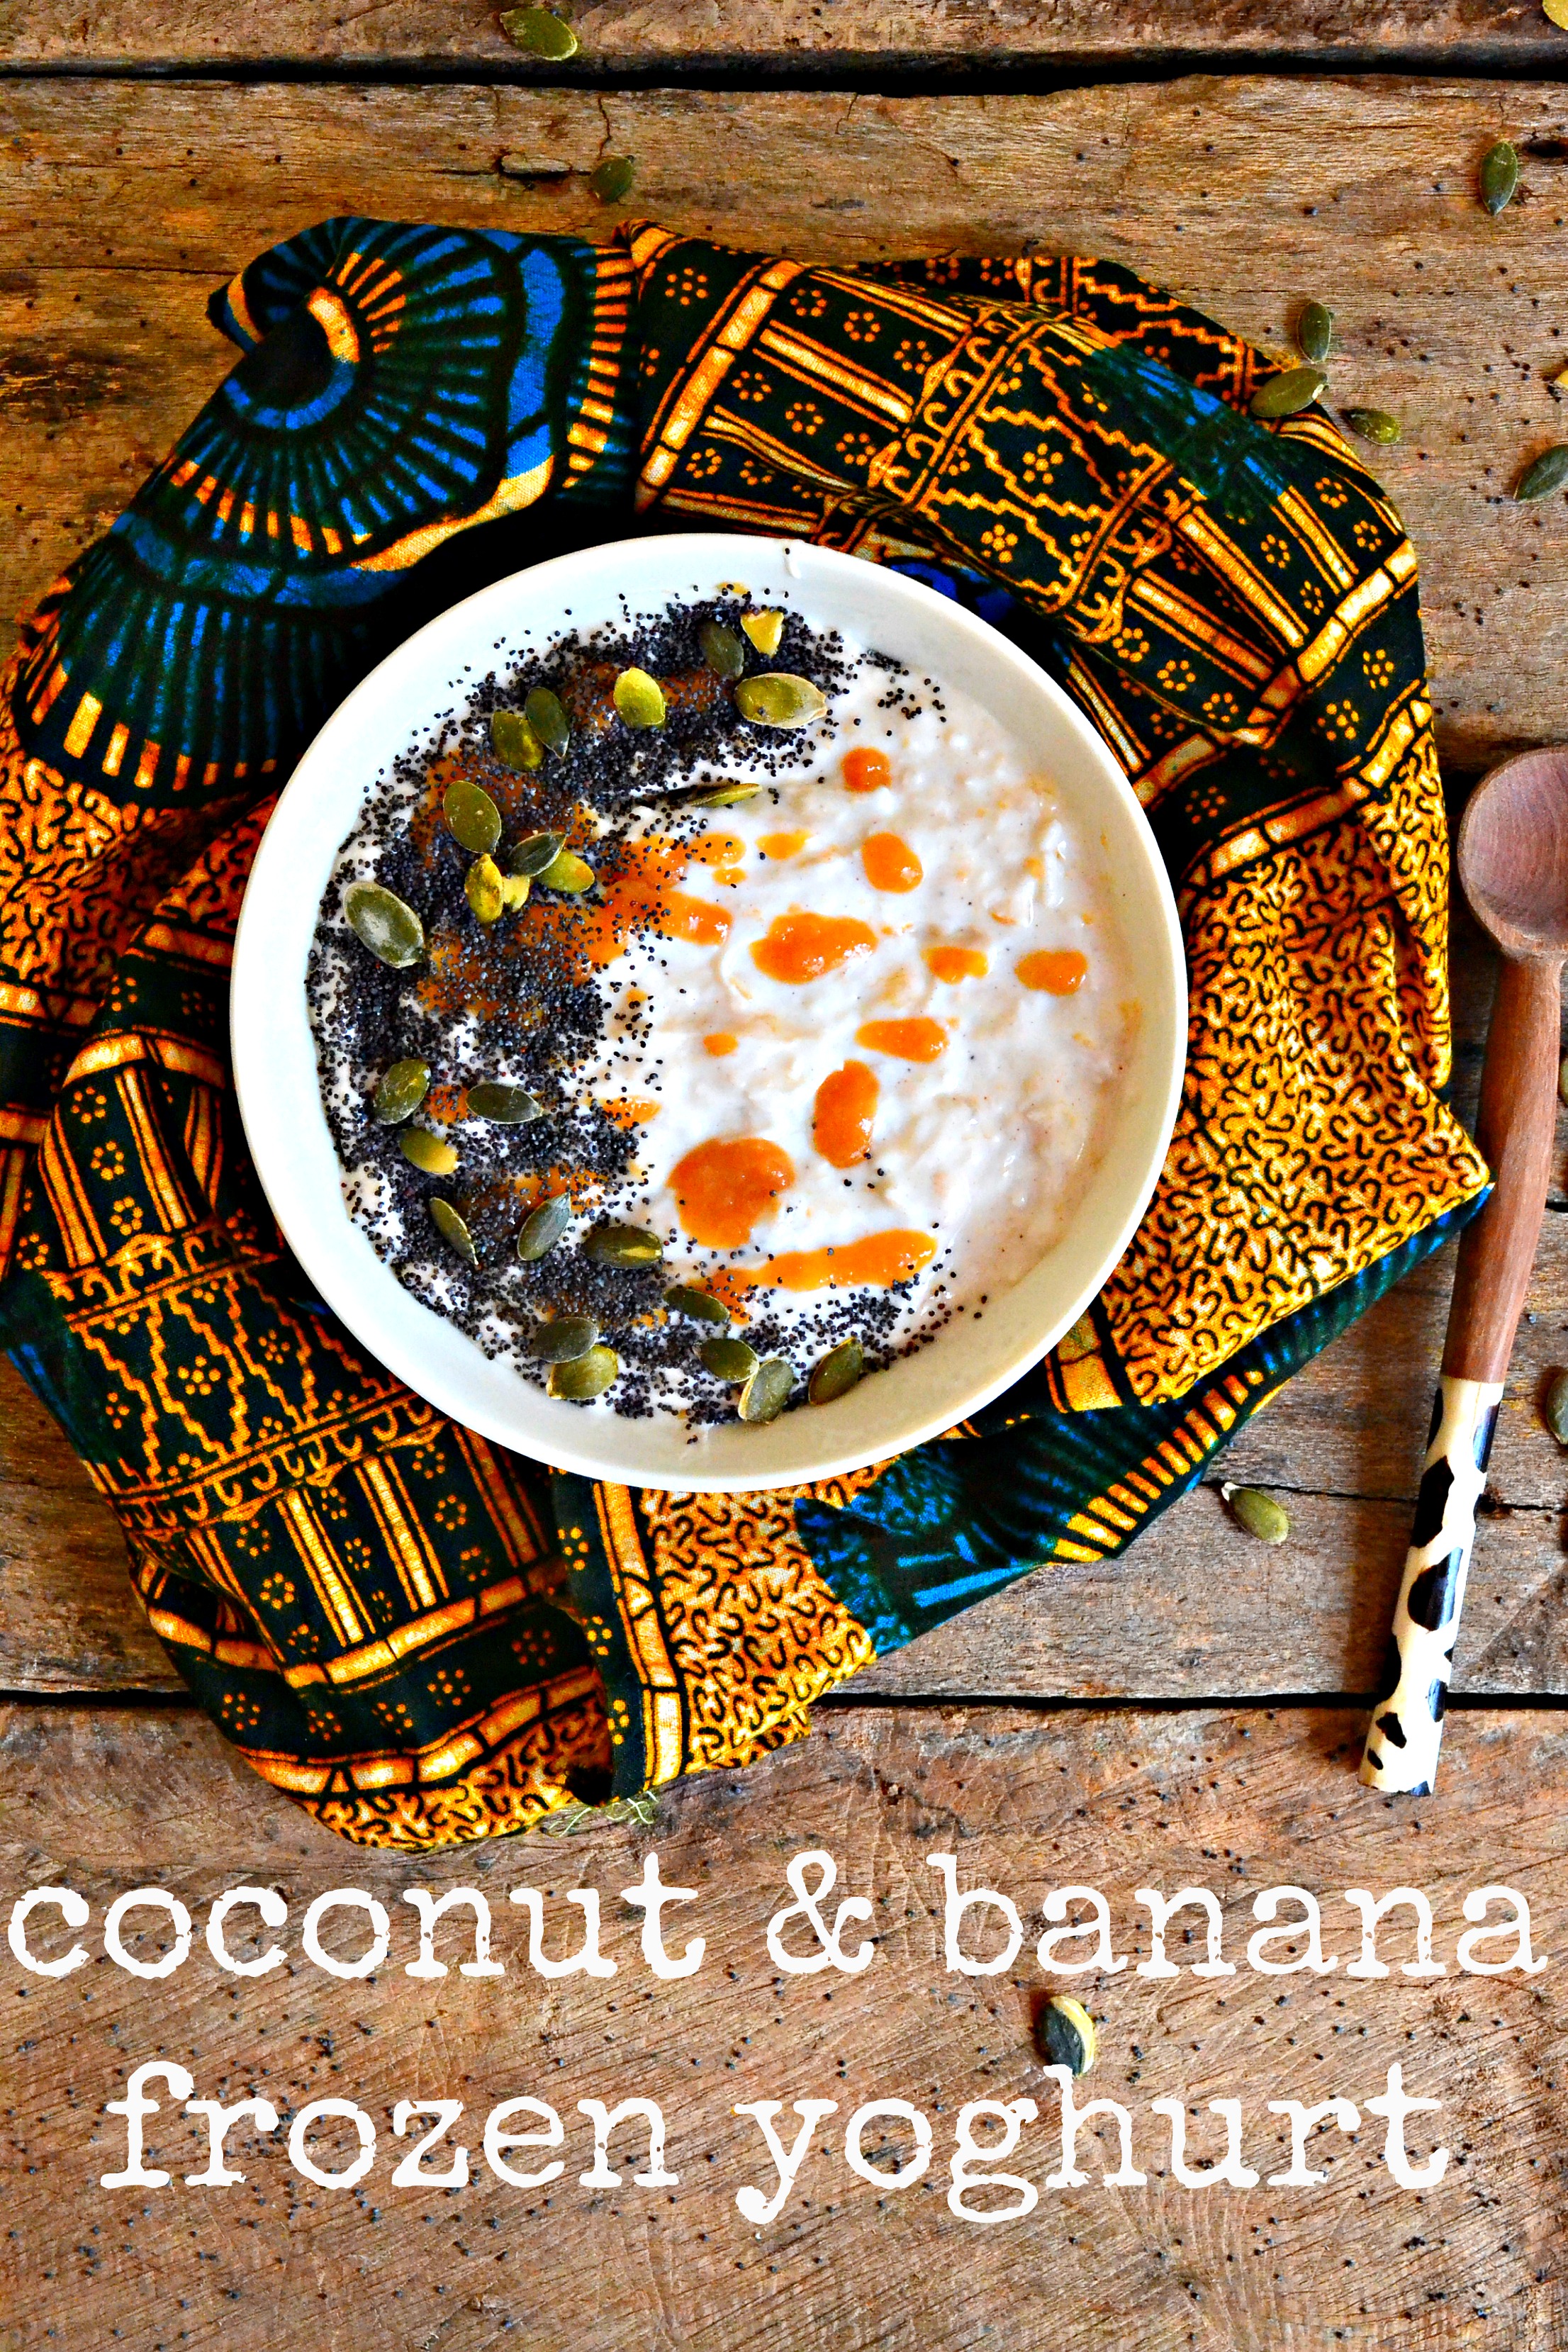 coconutt-and-banana-frozen-yoghurt_kaluhiskitchen-com_how-to-make-banana-frozen-yoghurt_best-kenay-food-blogs_best-african-food-blogs